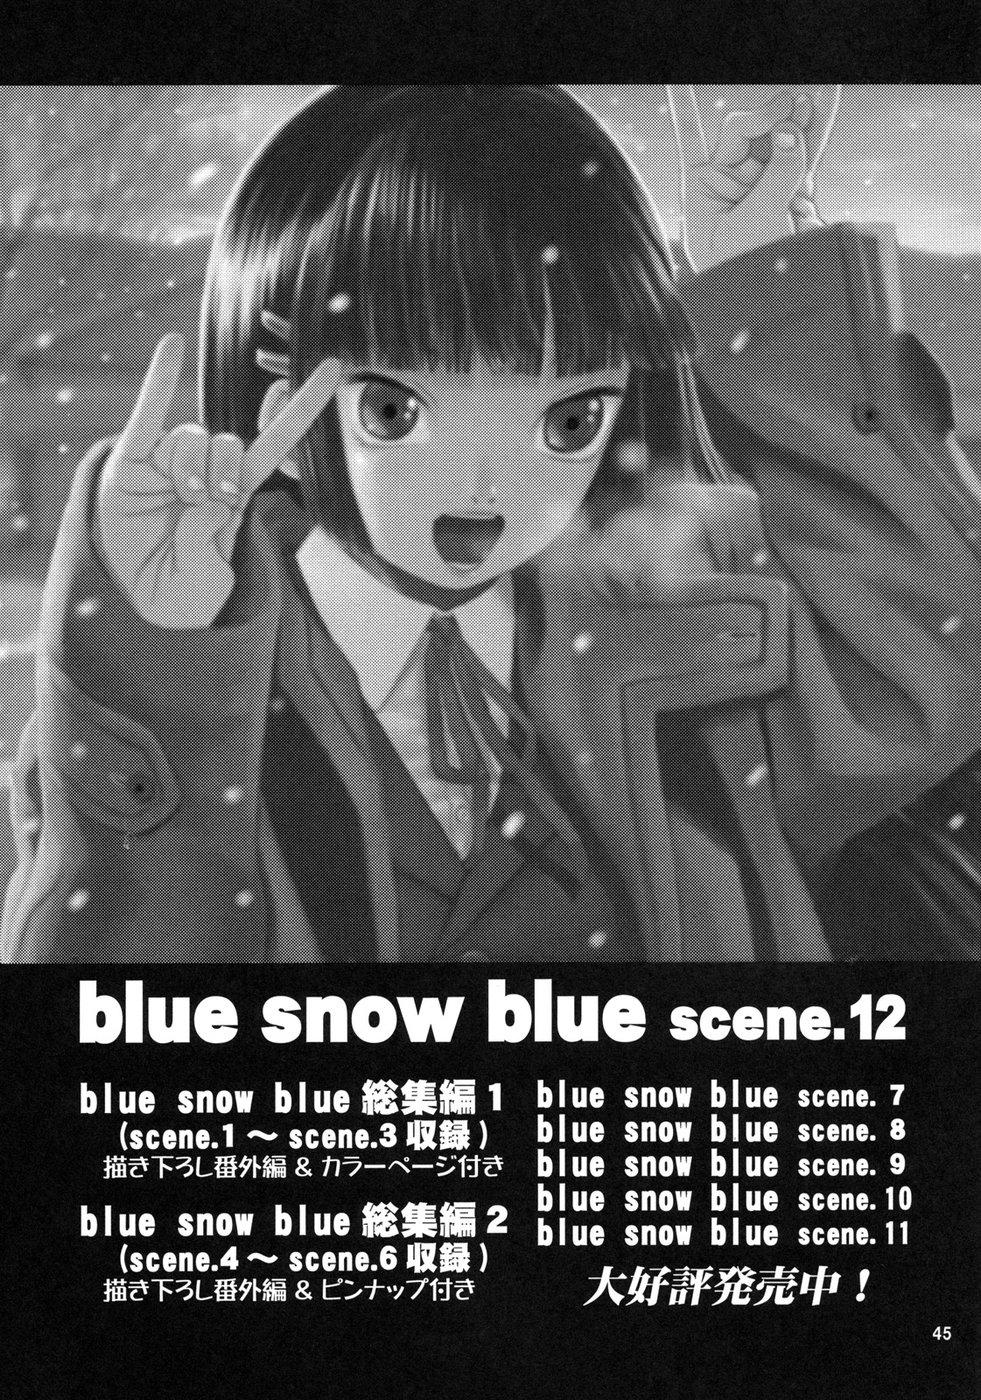 blue snow blue scene.11 43